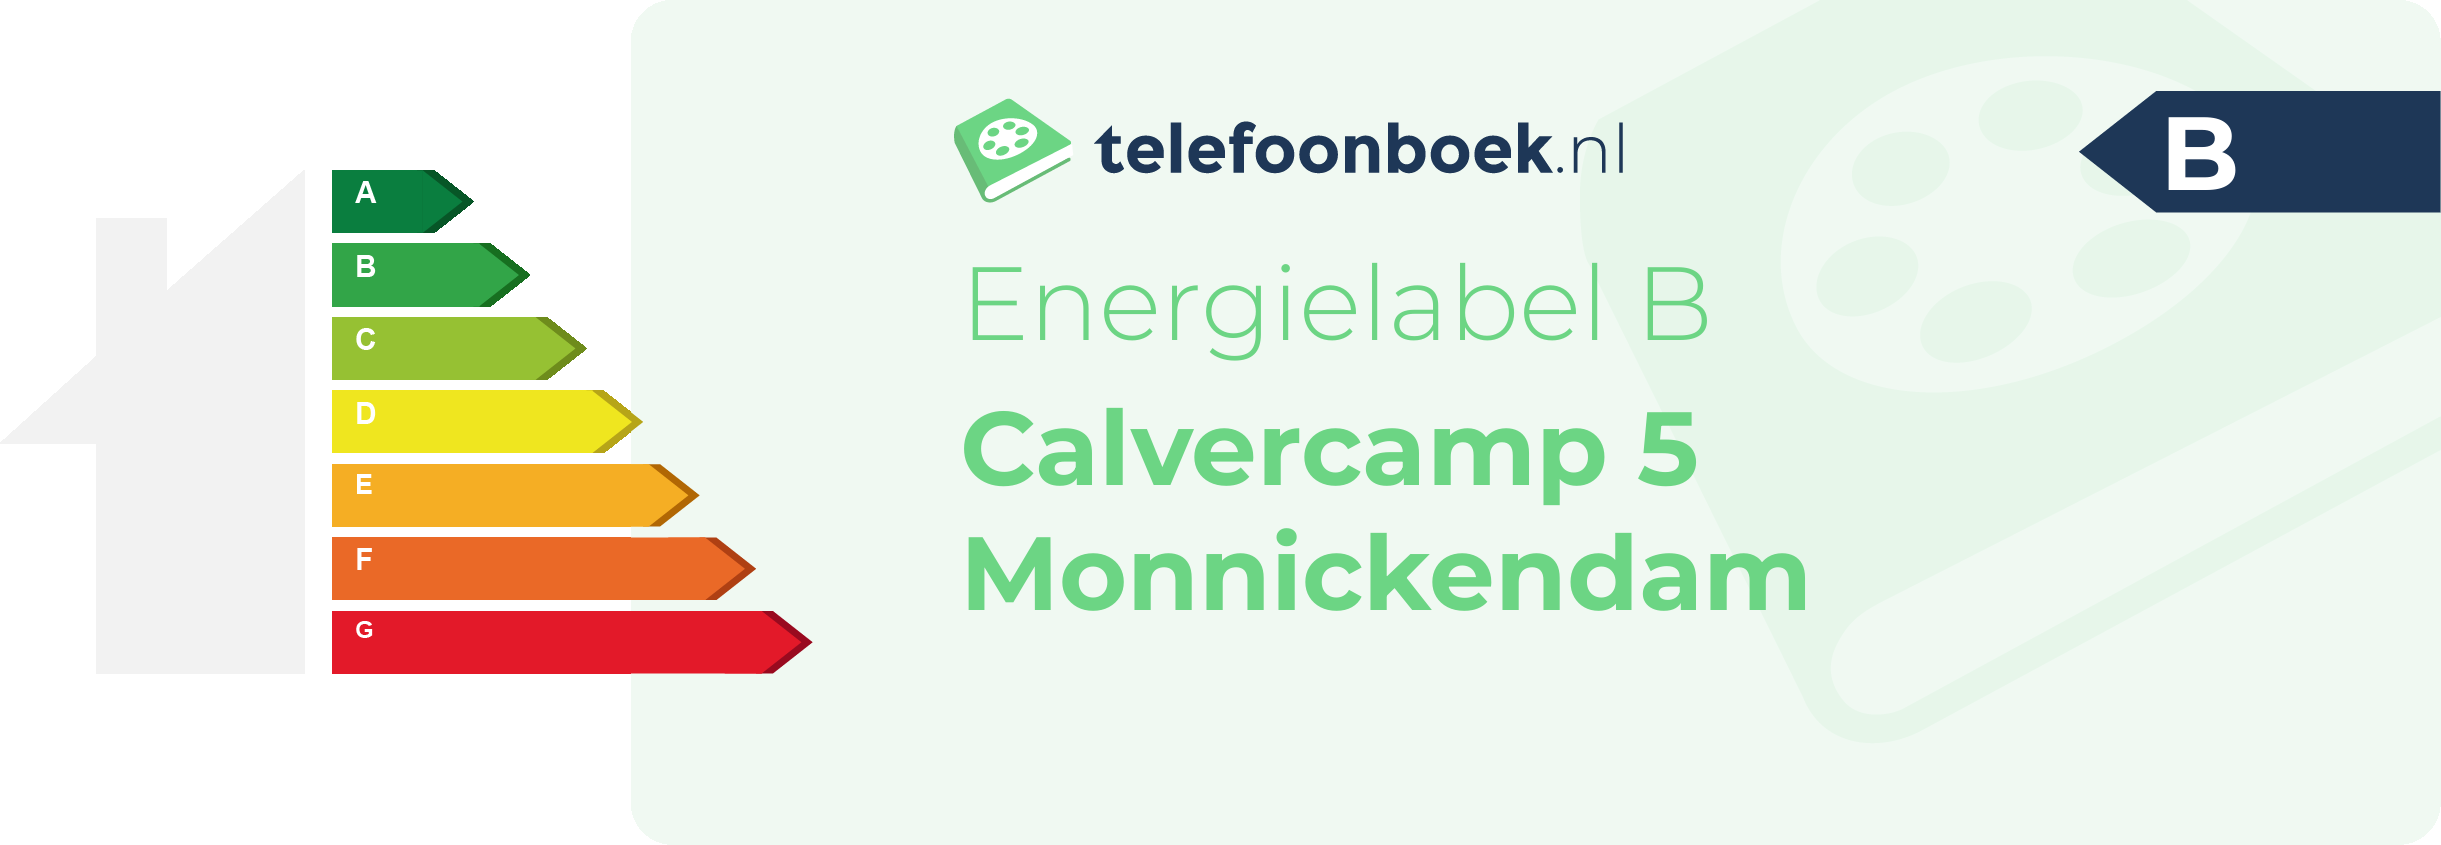 Energielabel Calvercamp 5 Monnickendam